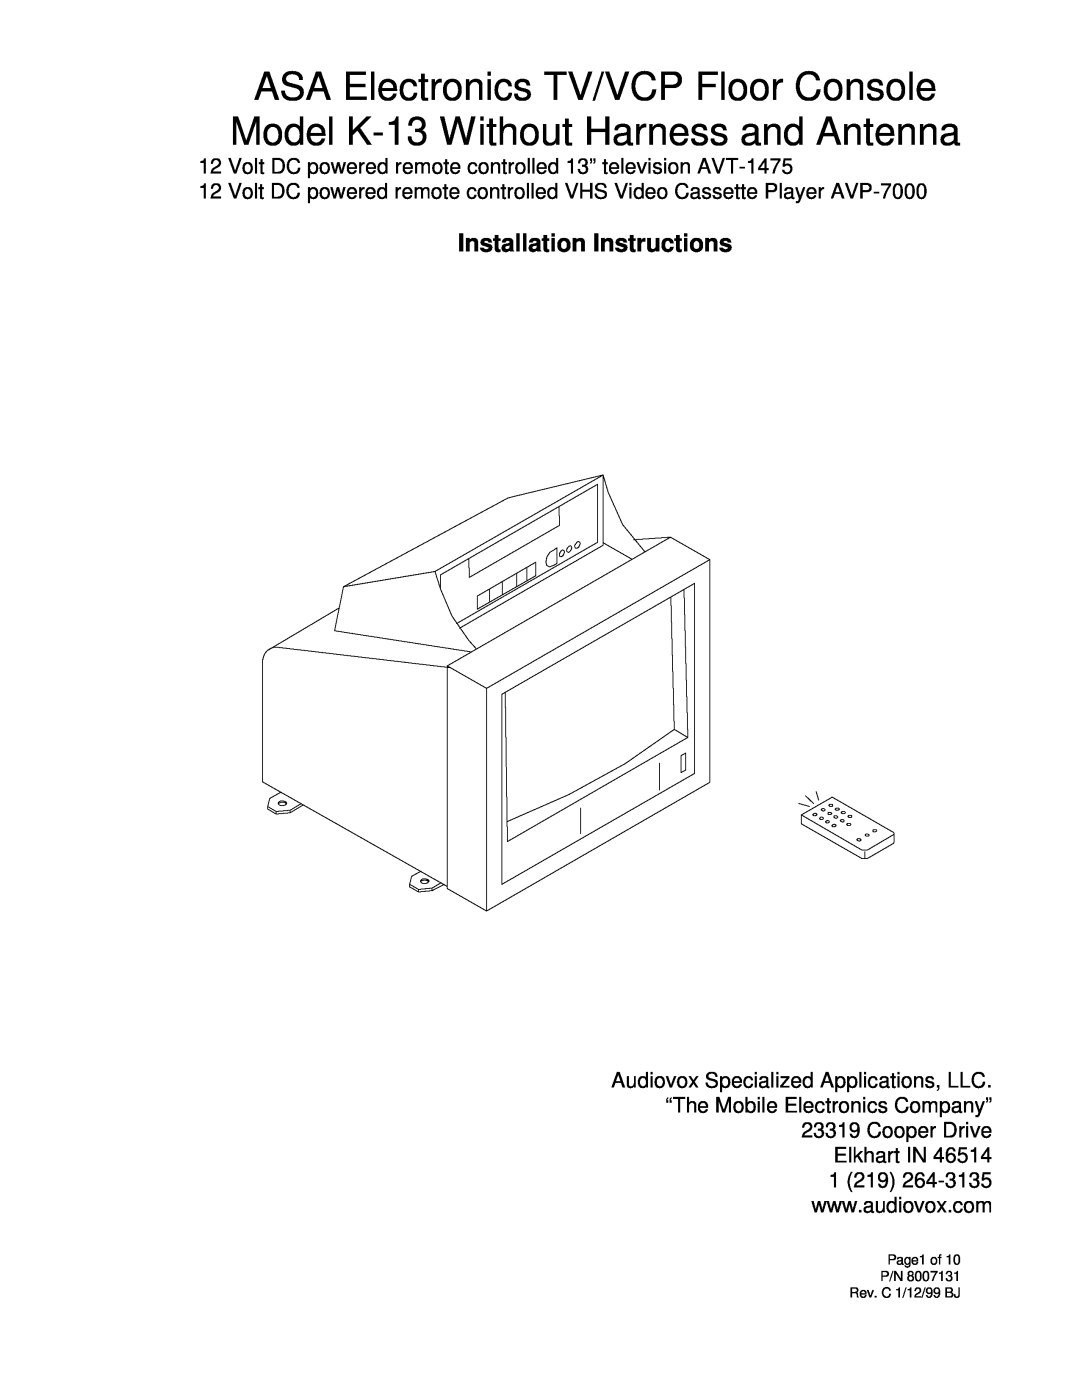 Audiovox K-13 installation instructions Installation Instructions, Page1 of P/N Rev. C 1/12/99 BJ 